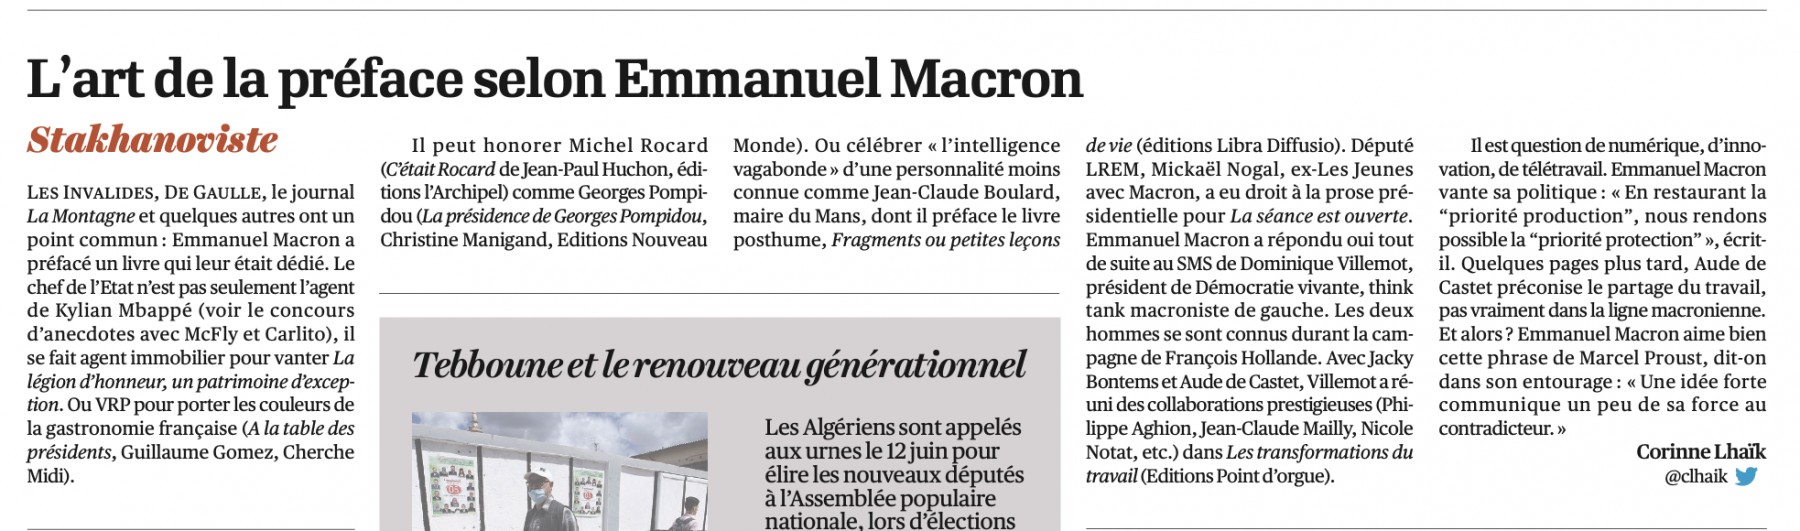 L'art de la préface selon Emmanuel Macron